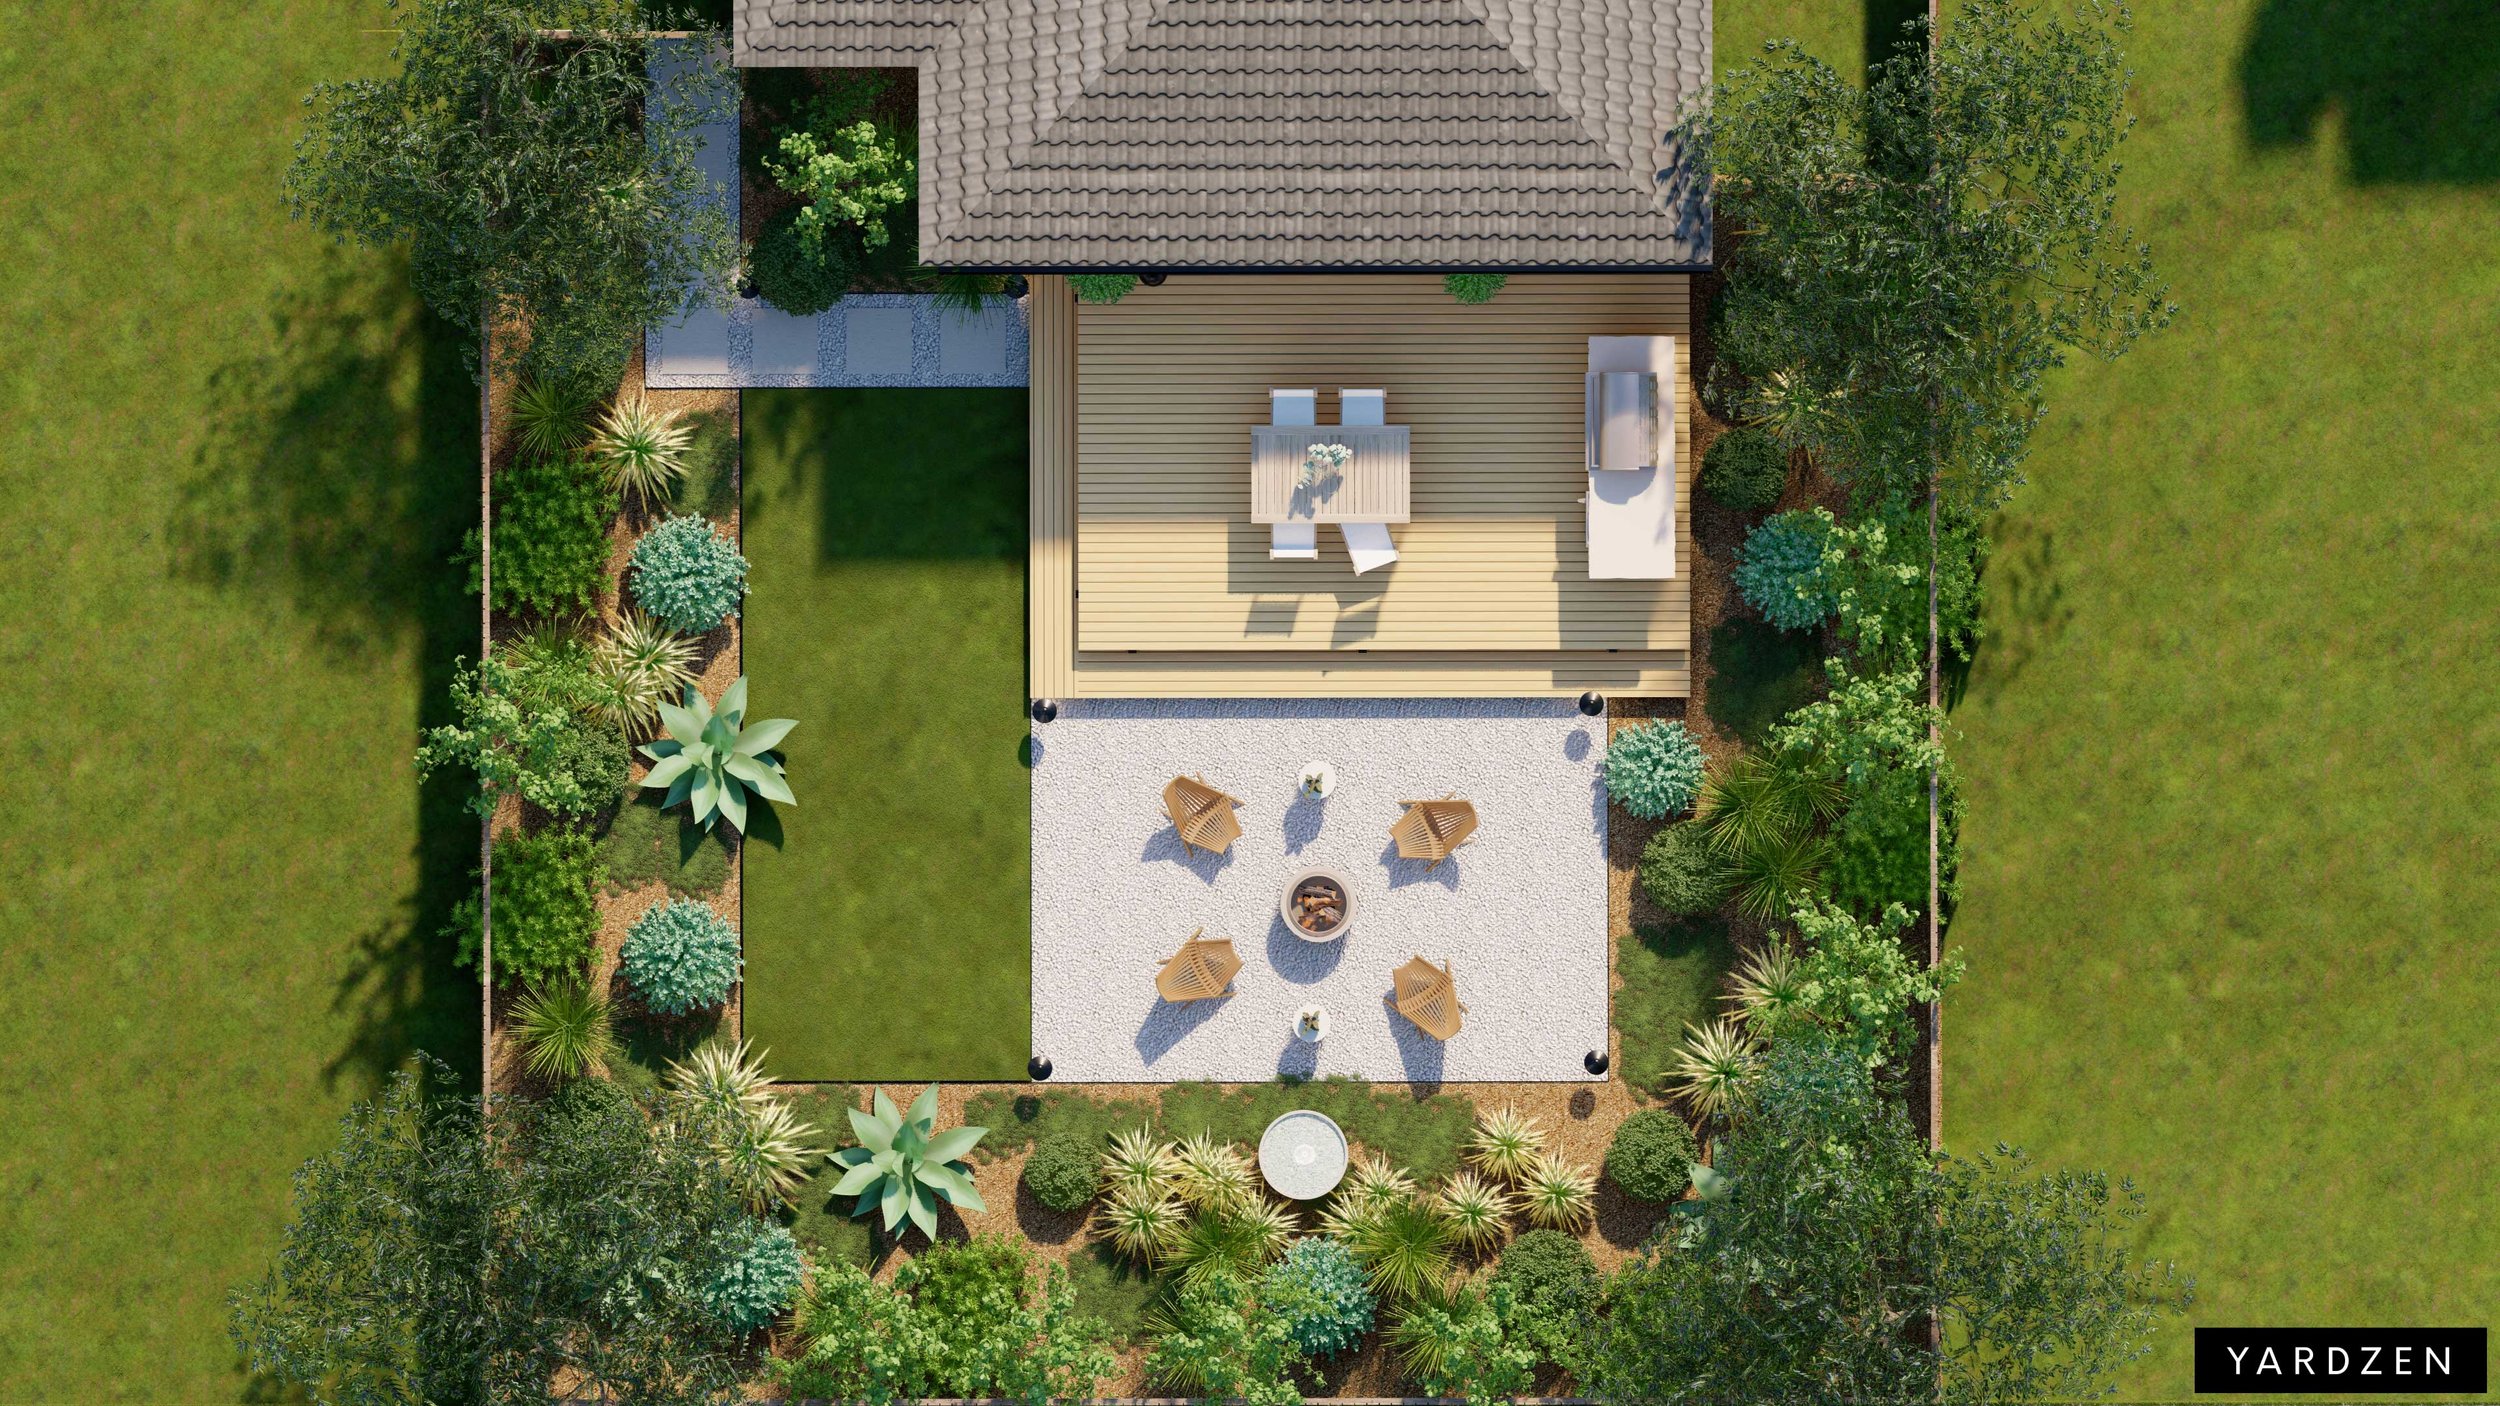 Client’s backyard top view for $75,000 Yardzen transformation